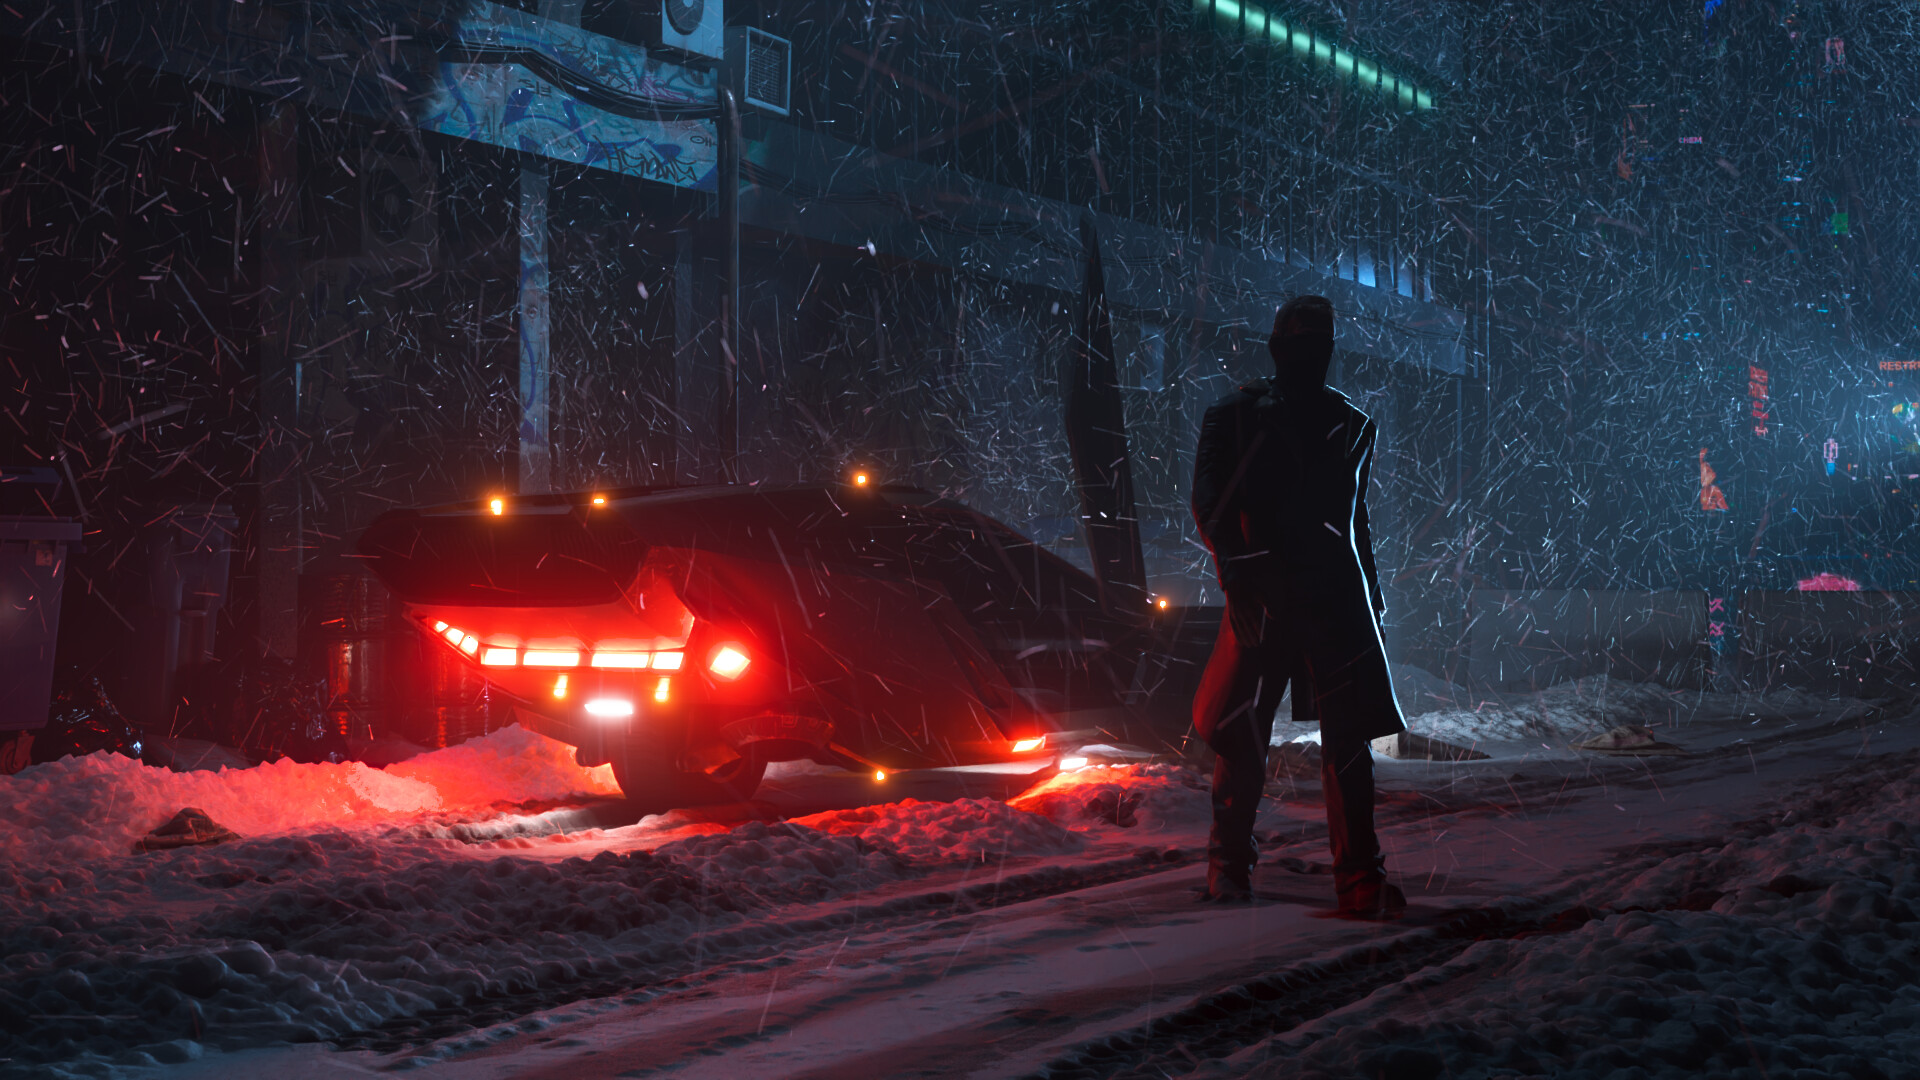 Blade Runner Digital Art Grzegorz Dorochowicz Night Snowing 1920x1080